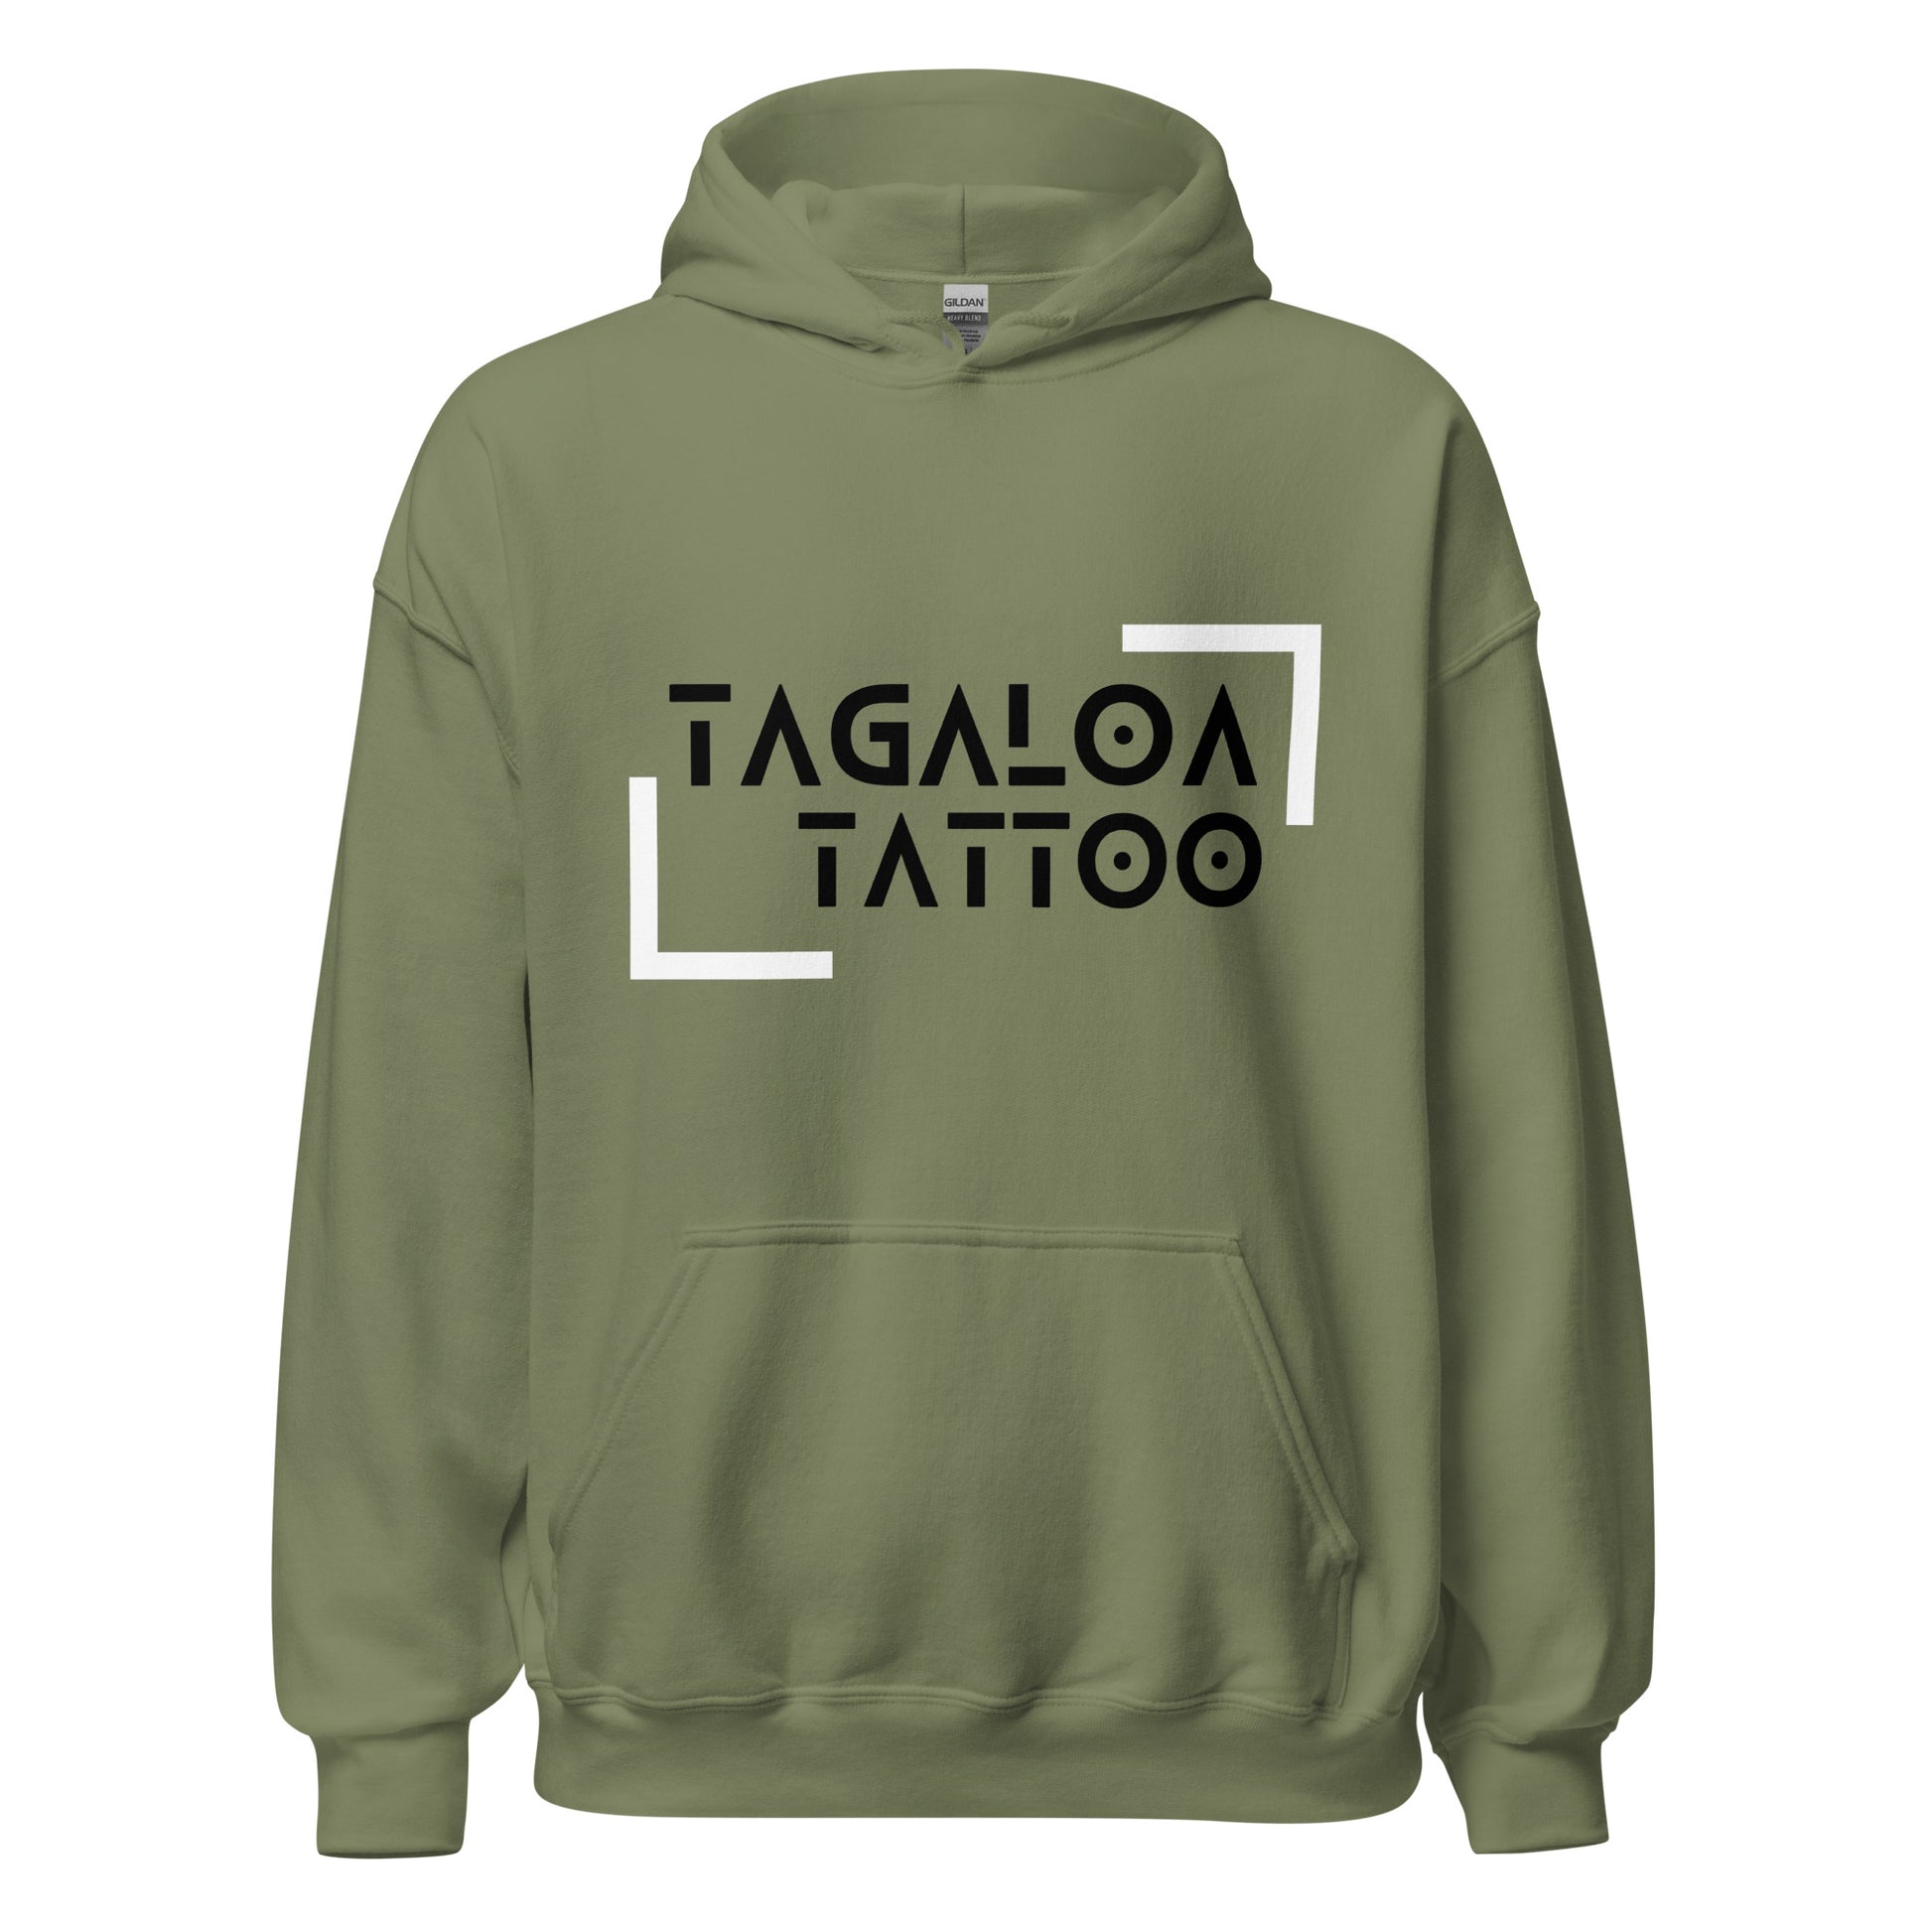 Green Tagaloa Tattoo Hoodie: Where Style Meets Passion